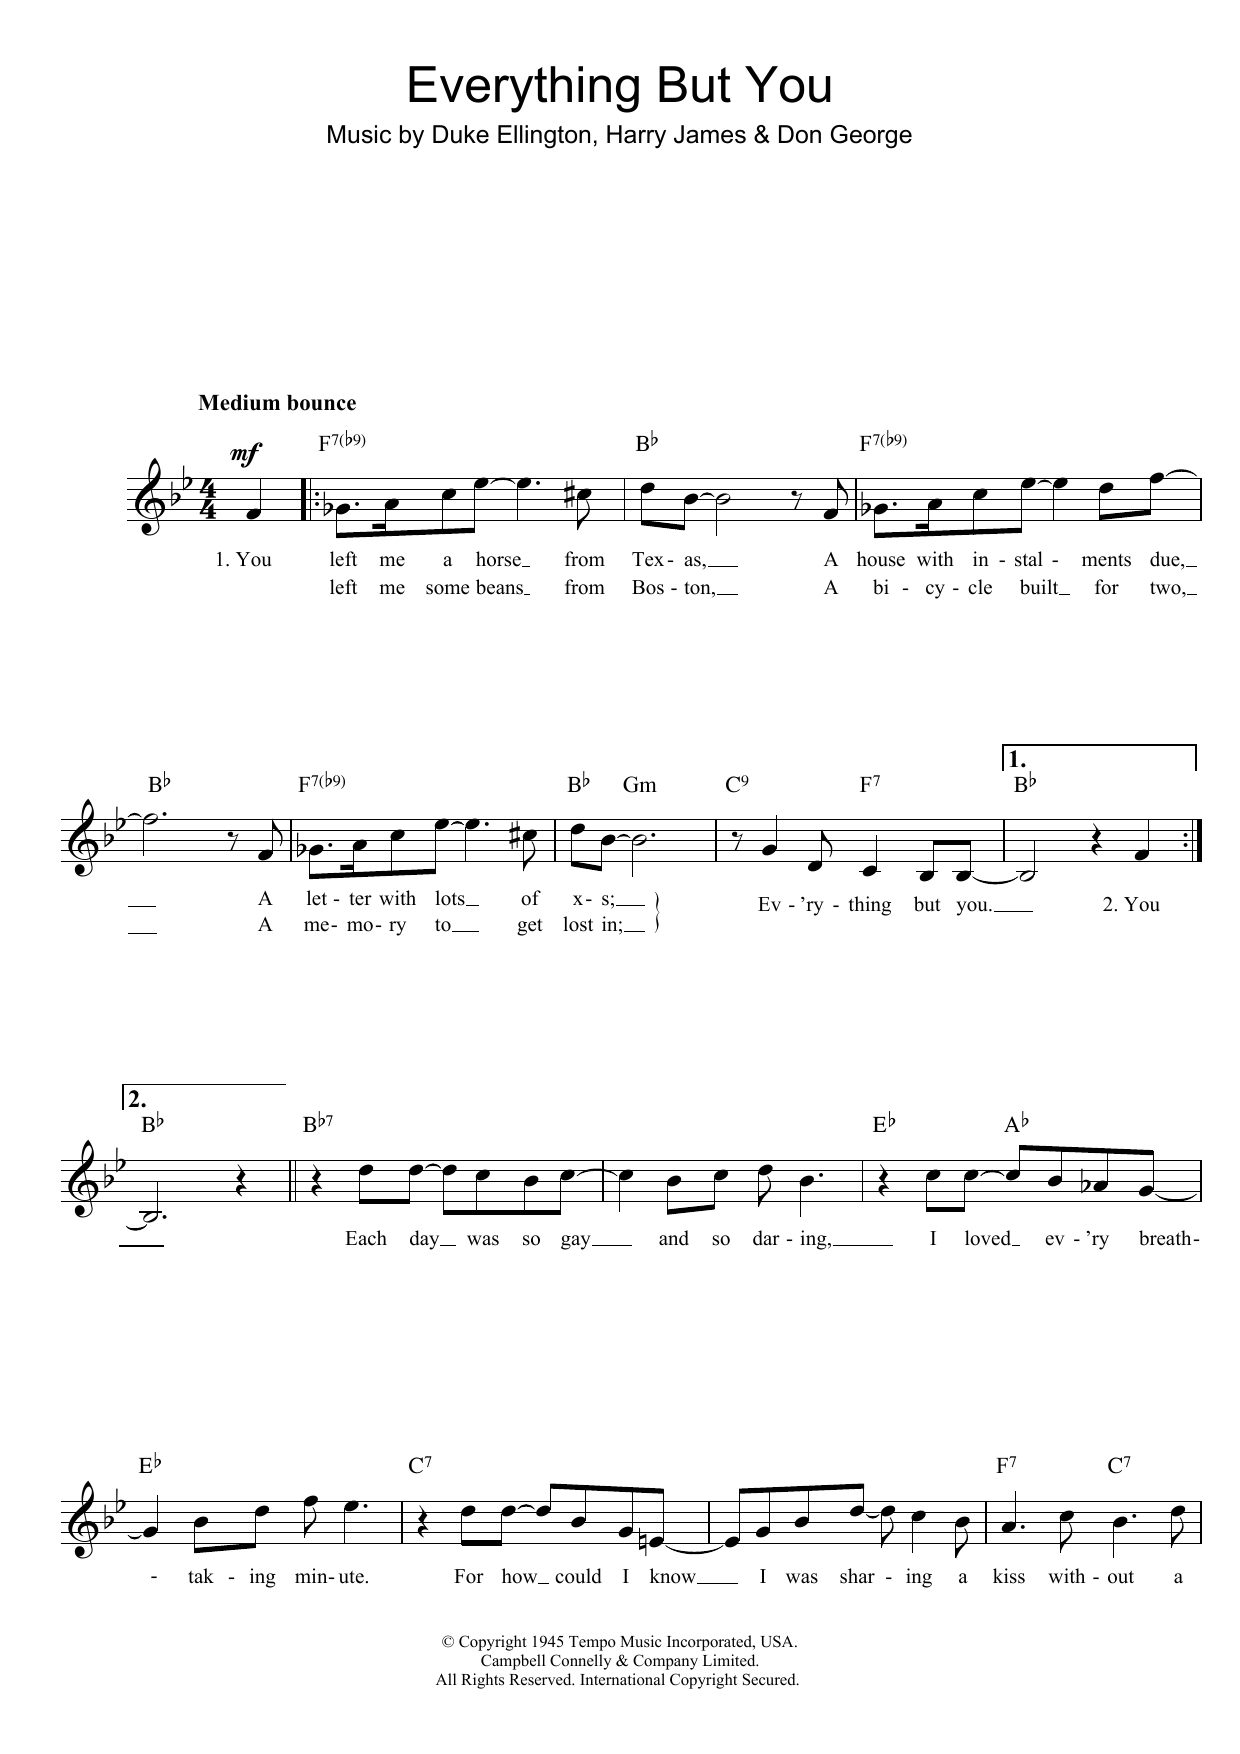 Duke Ellington Everything But You Sheet Music Notes & Chords for Melody Line, Lyrics & Chords - Download or Print PDF